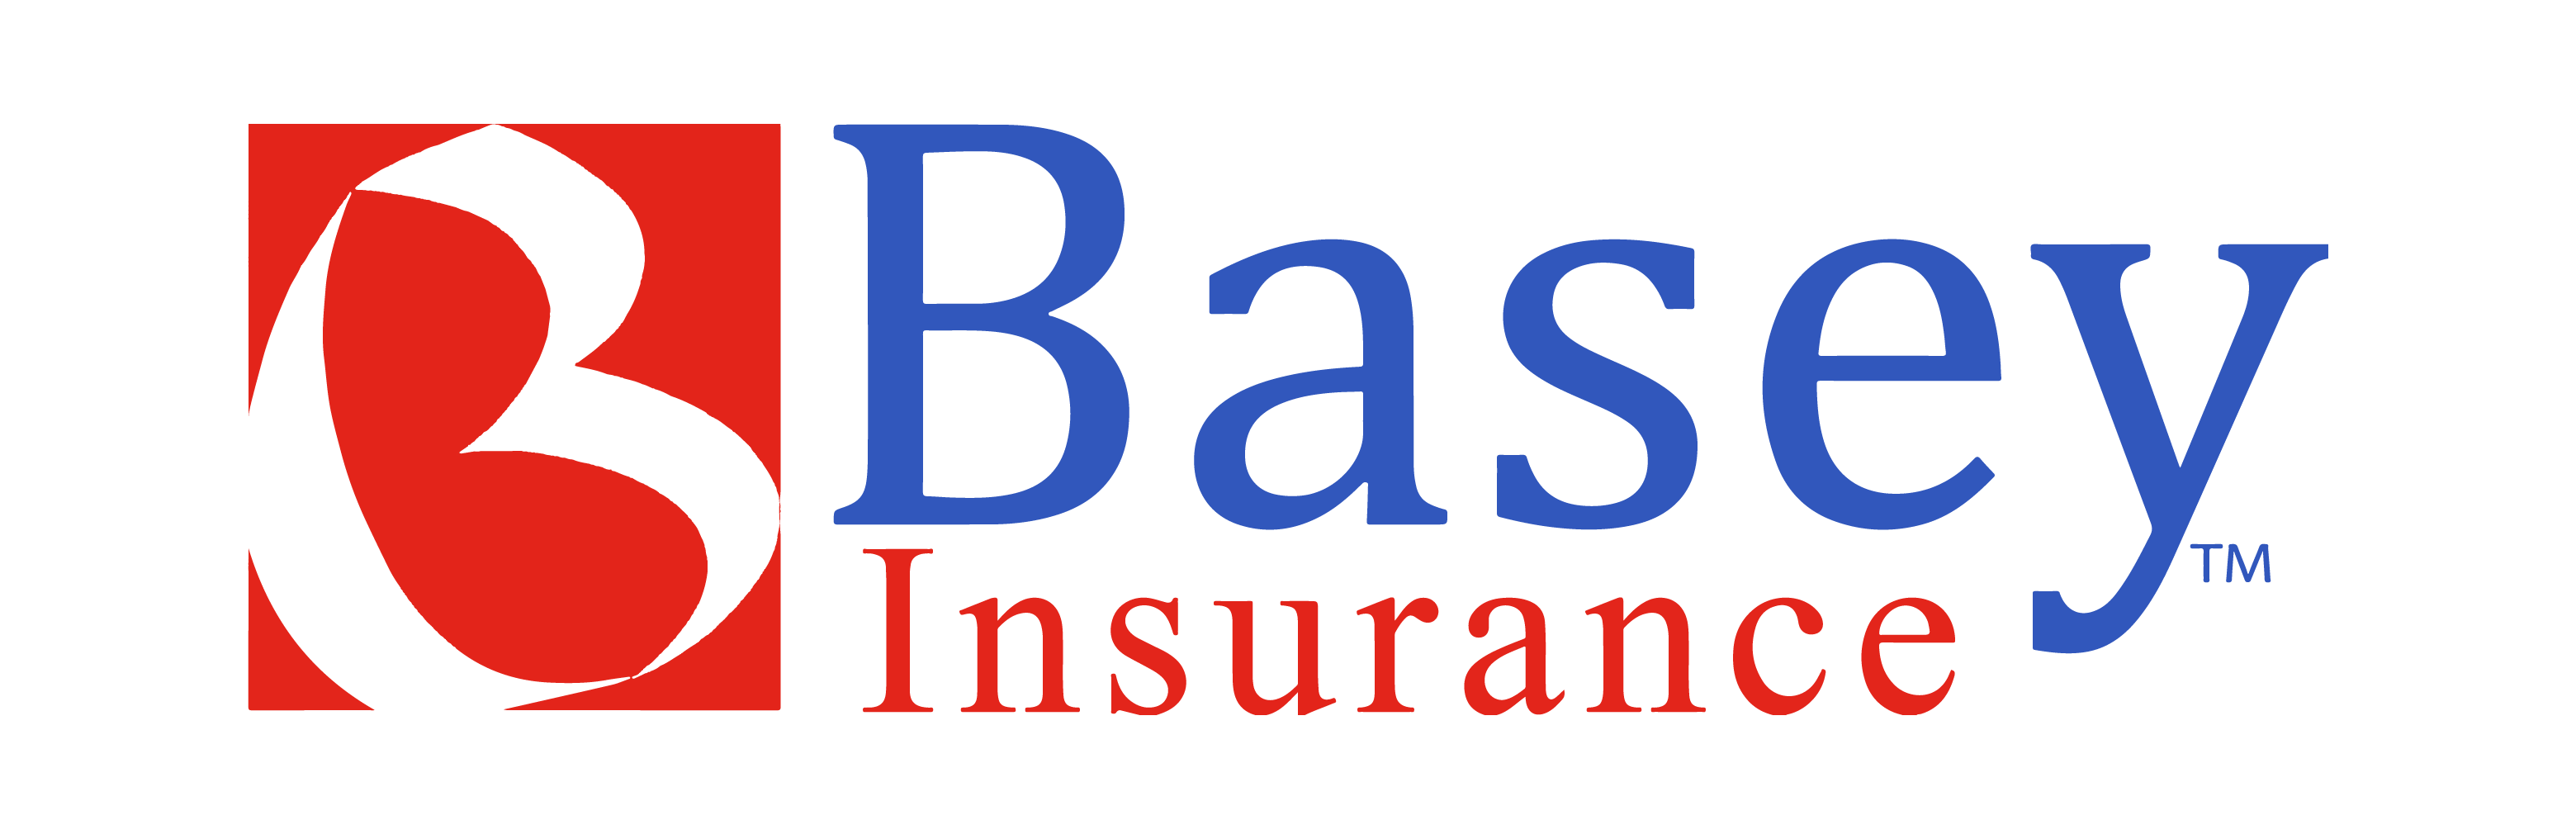 Basey Insurance